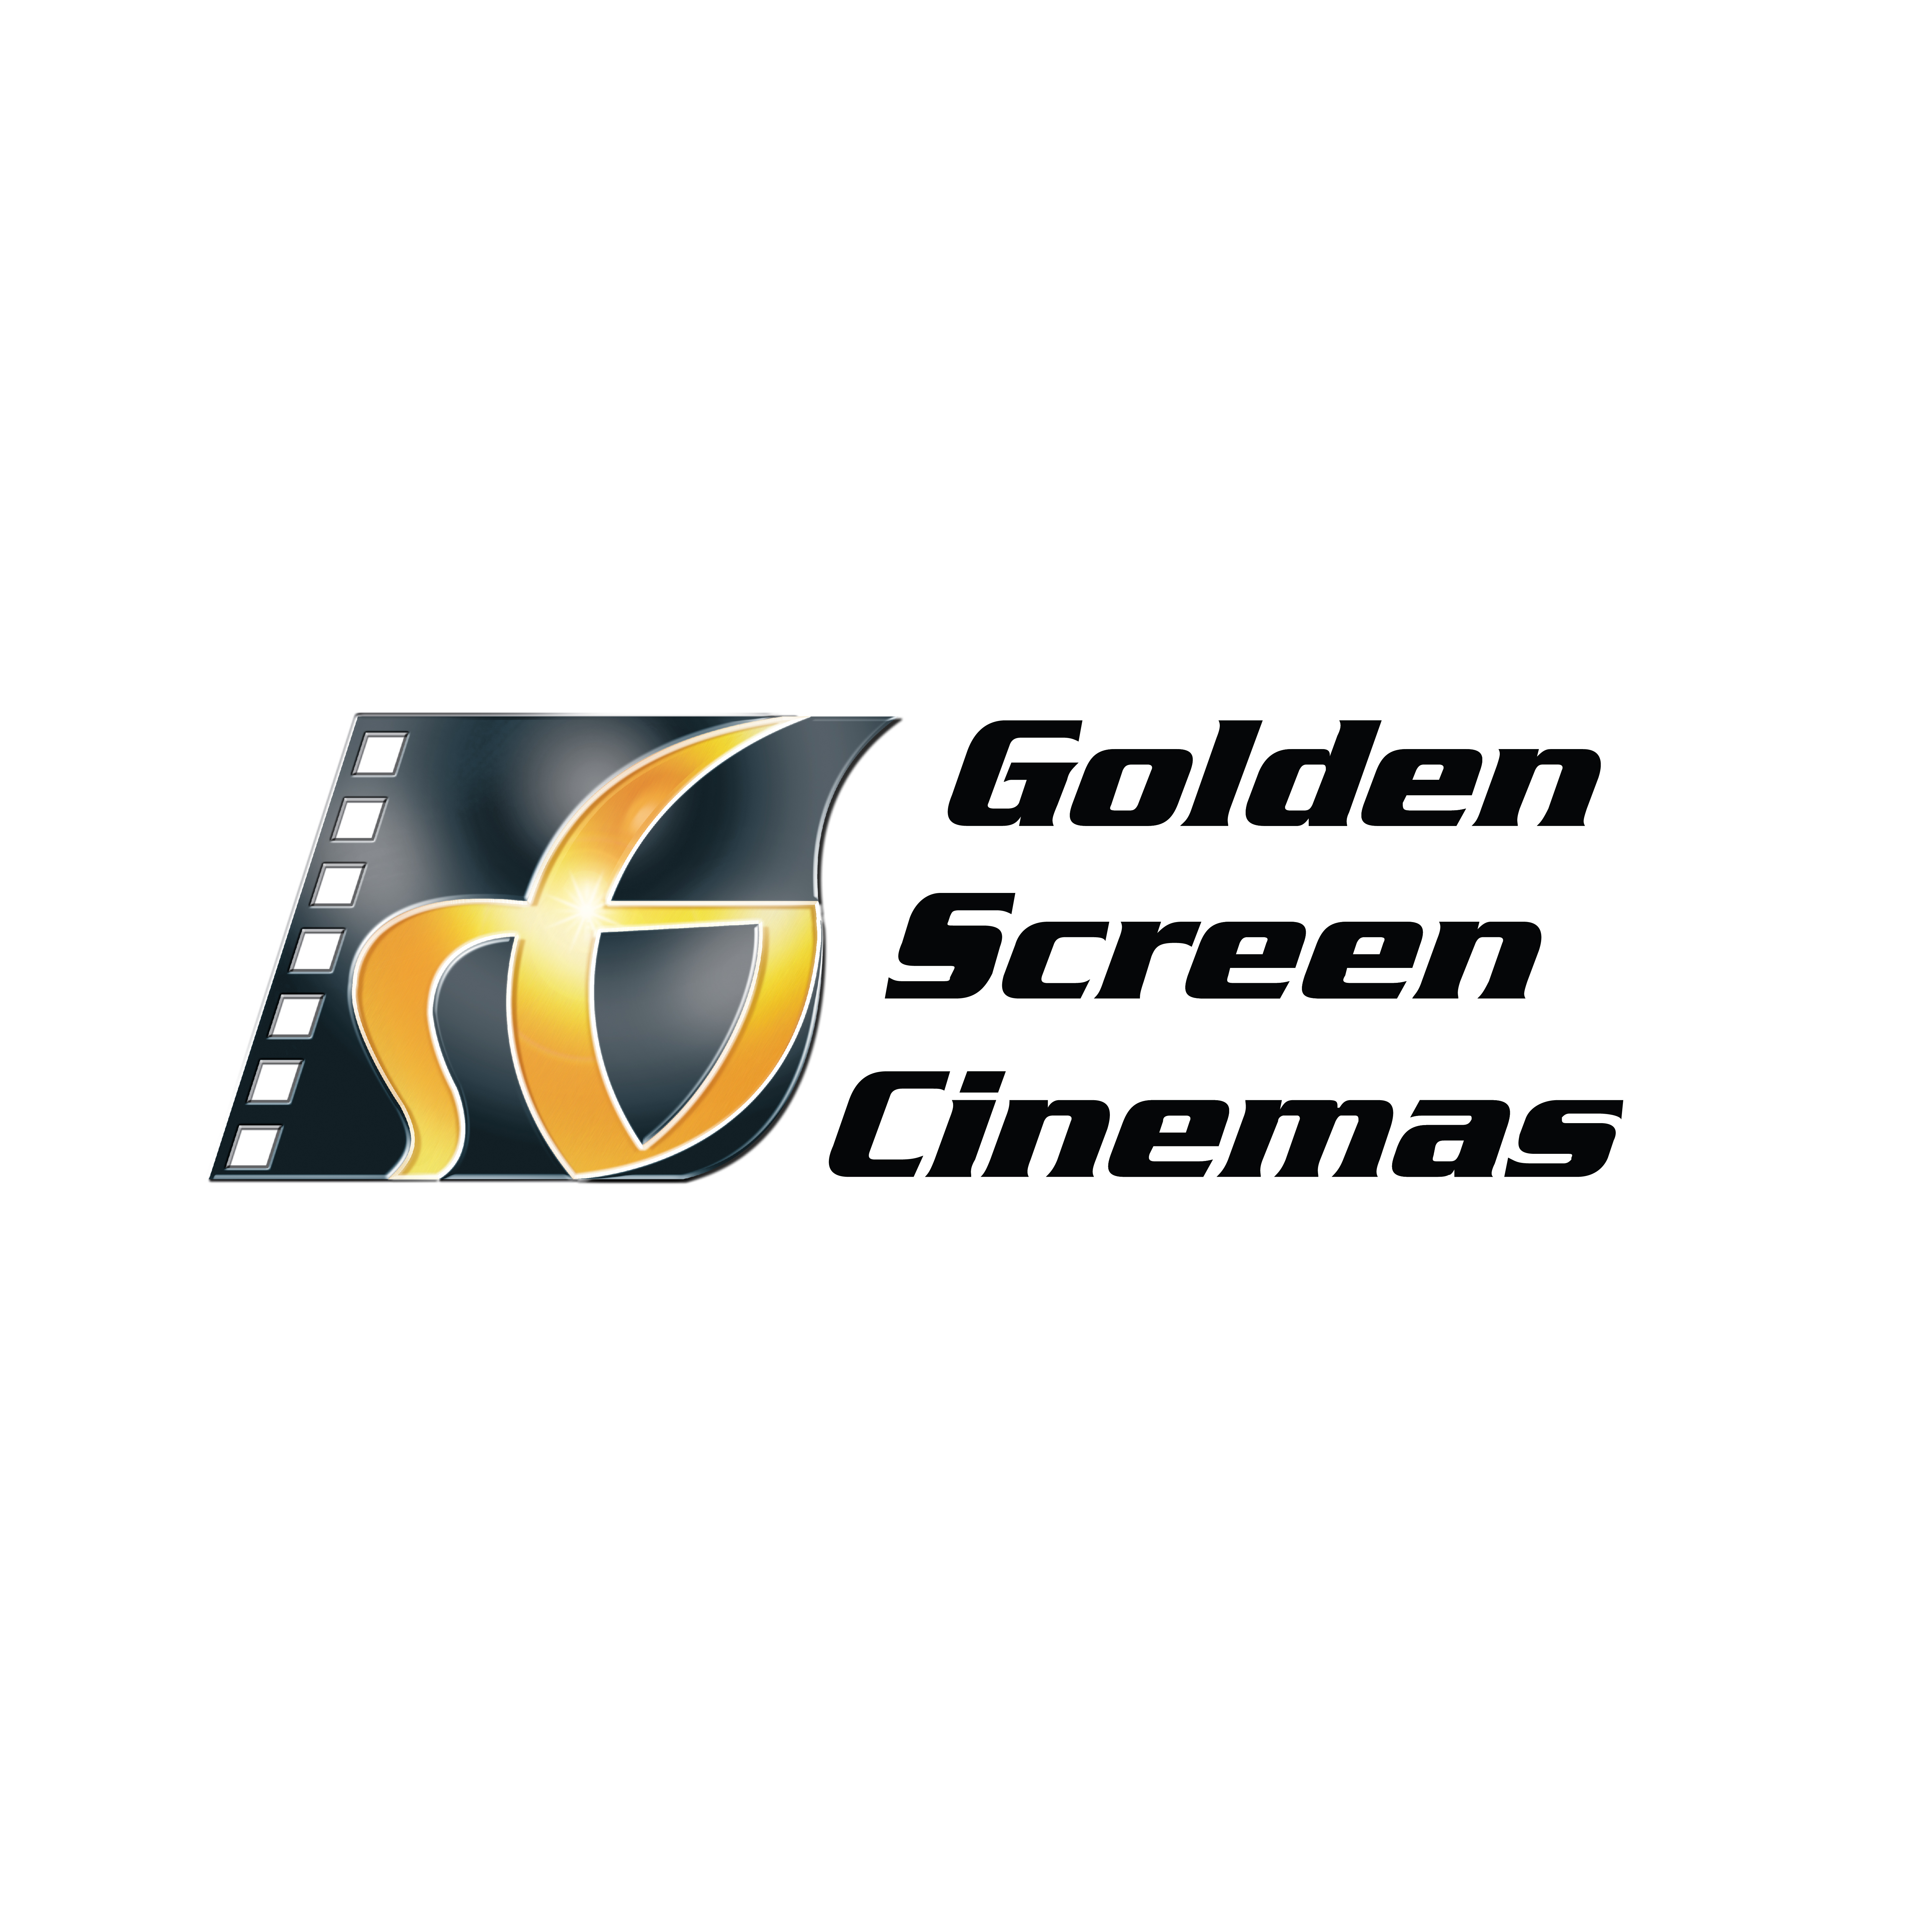 GSC Cinema